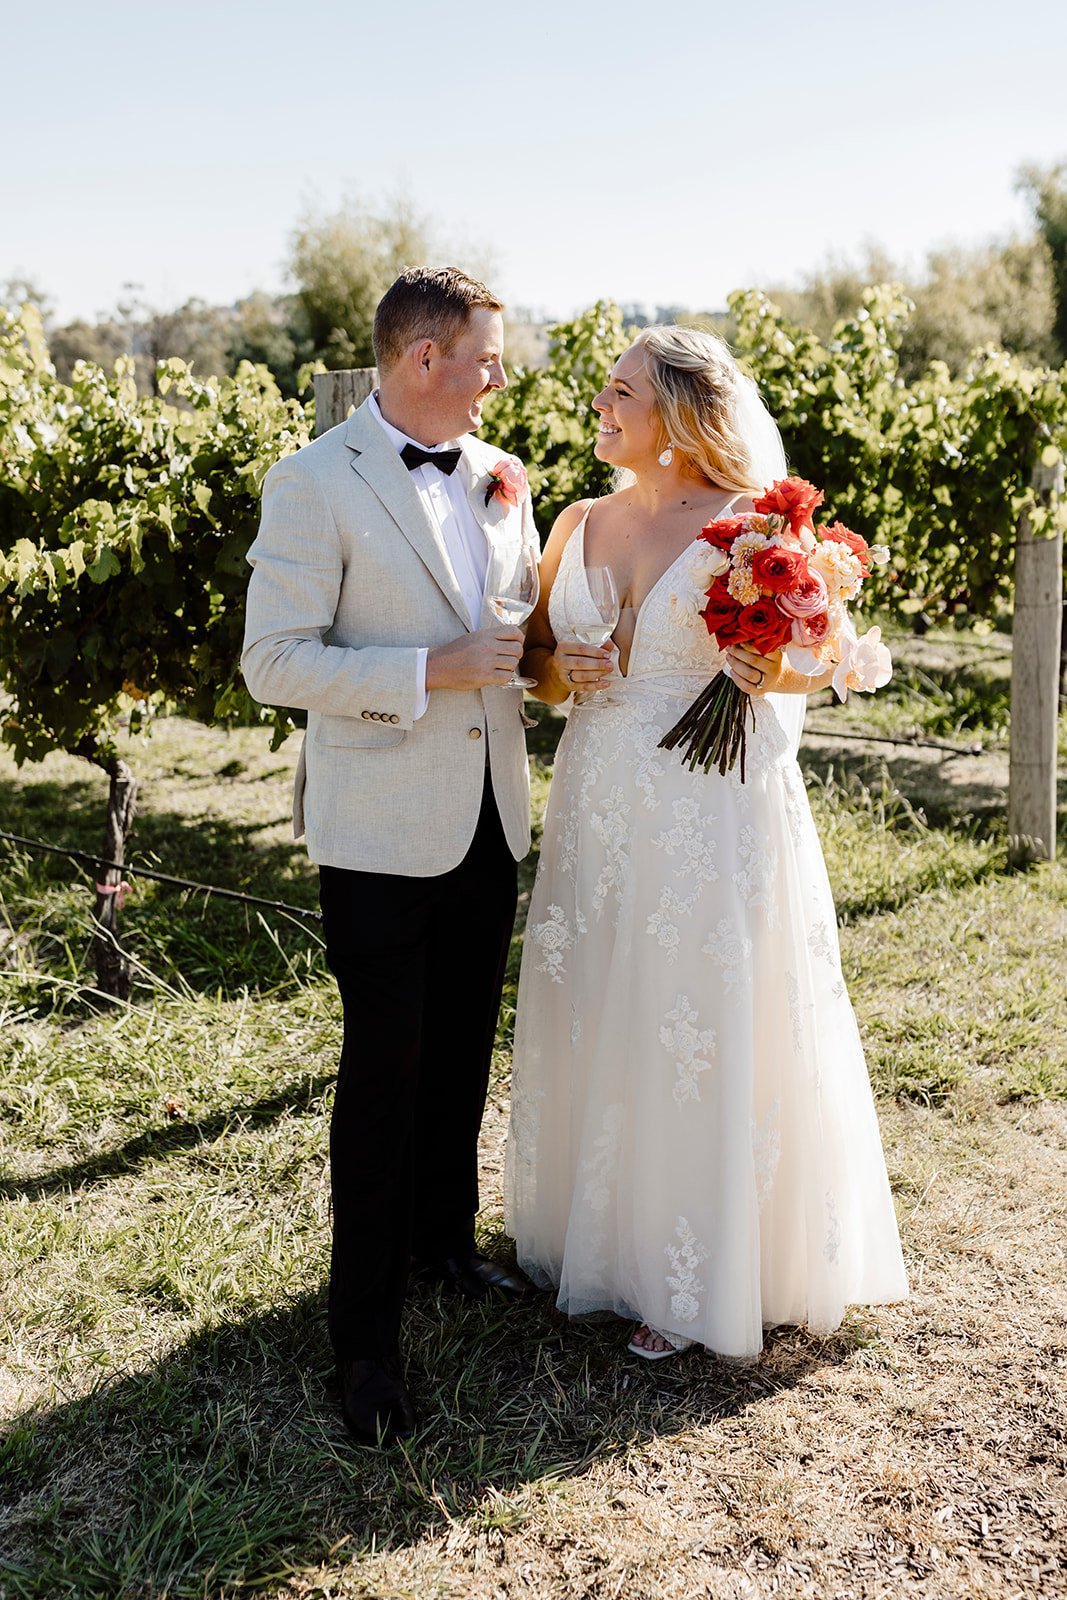 Kirsten-Cunningham-Photography-Colourful-Borrodell-Wedding-Orange-120.JPG